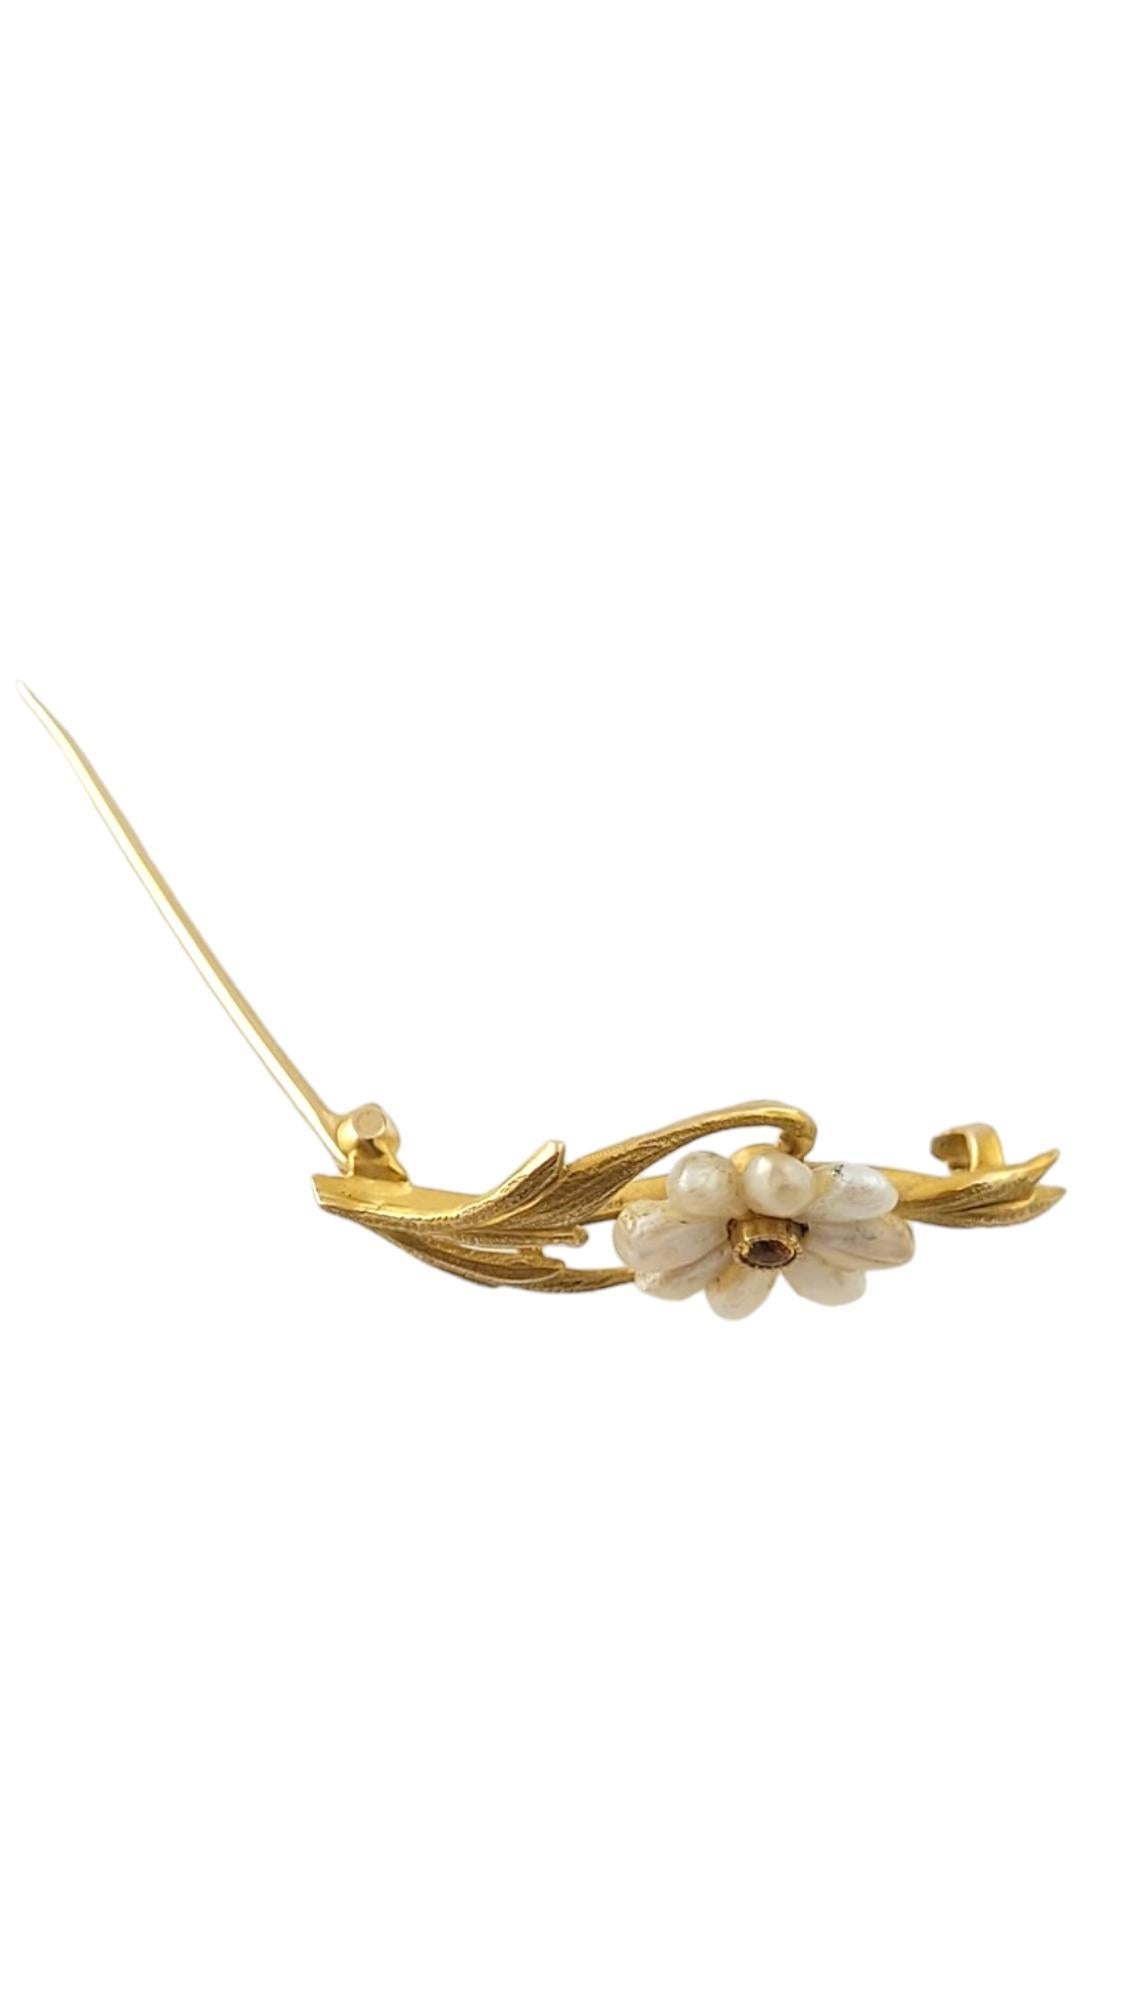 14K Yellow Gold Citrine & Baroque Keshi Pearl Flower Motif Pin #16943 For Sale 1